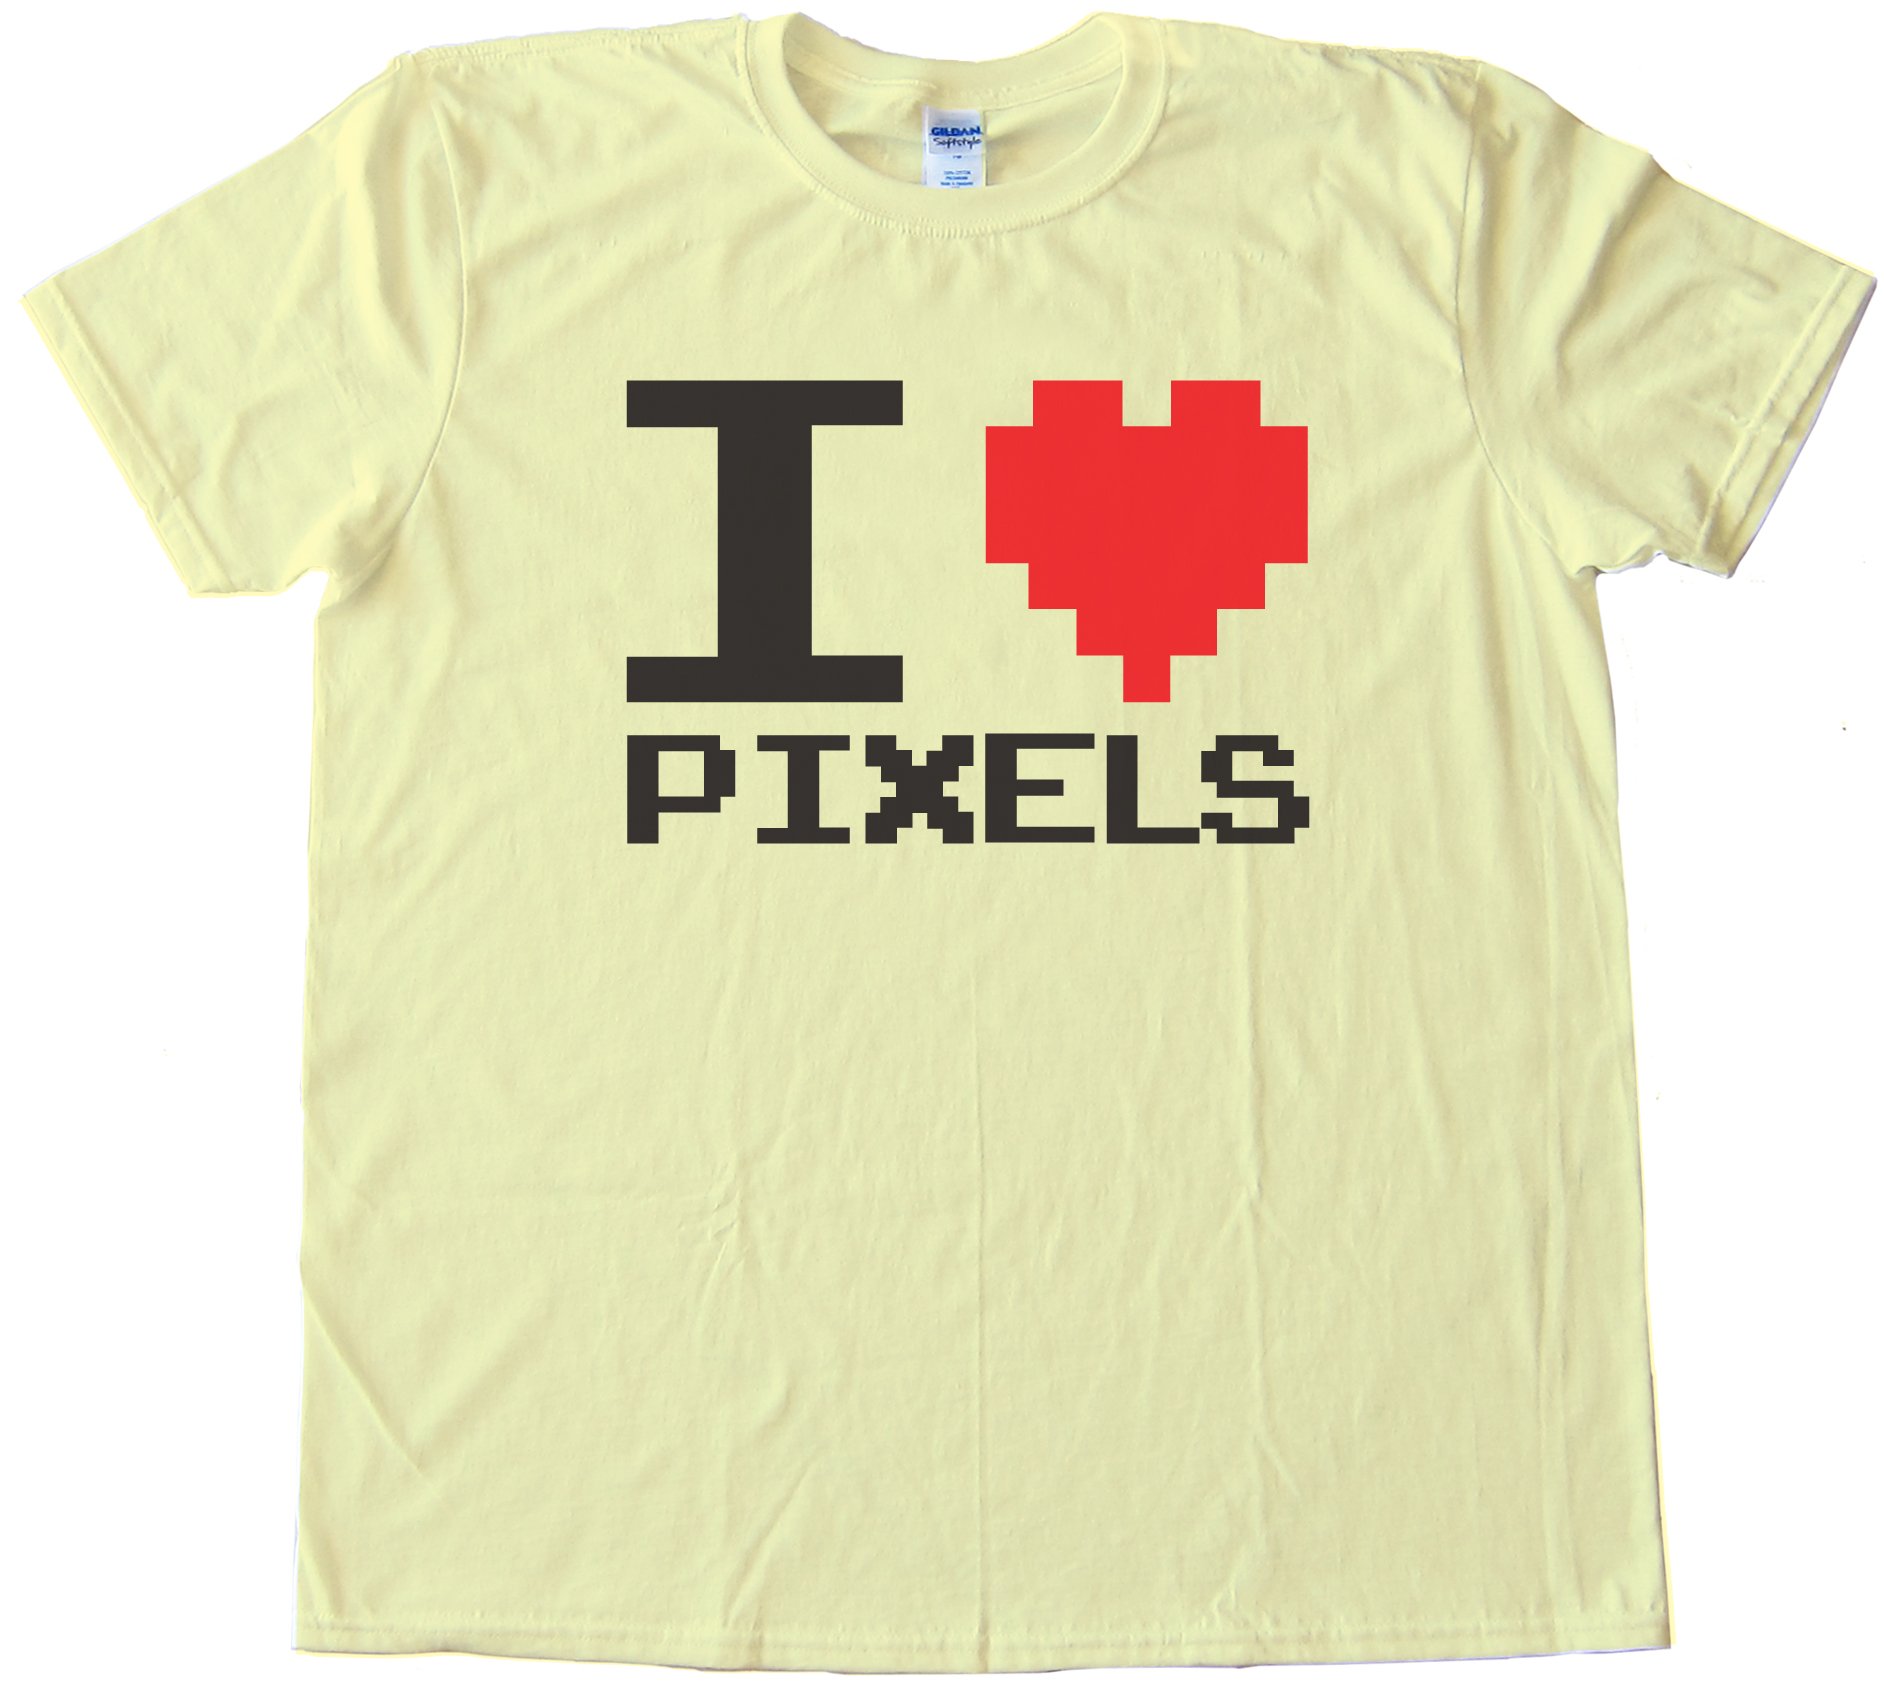 I Love Pixels - Tee Shirt